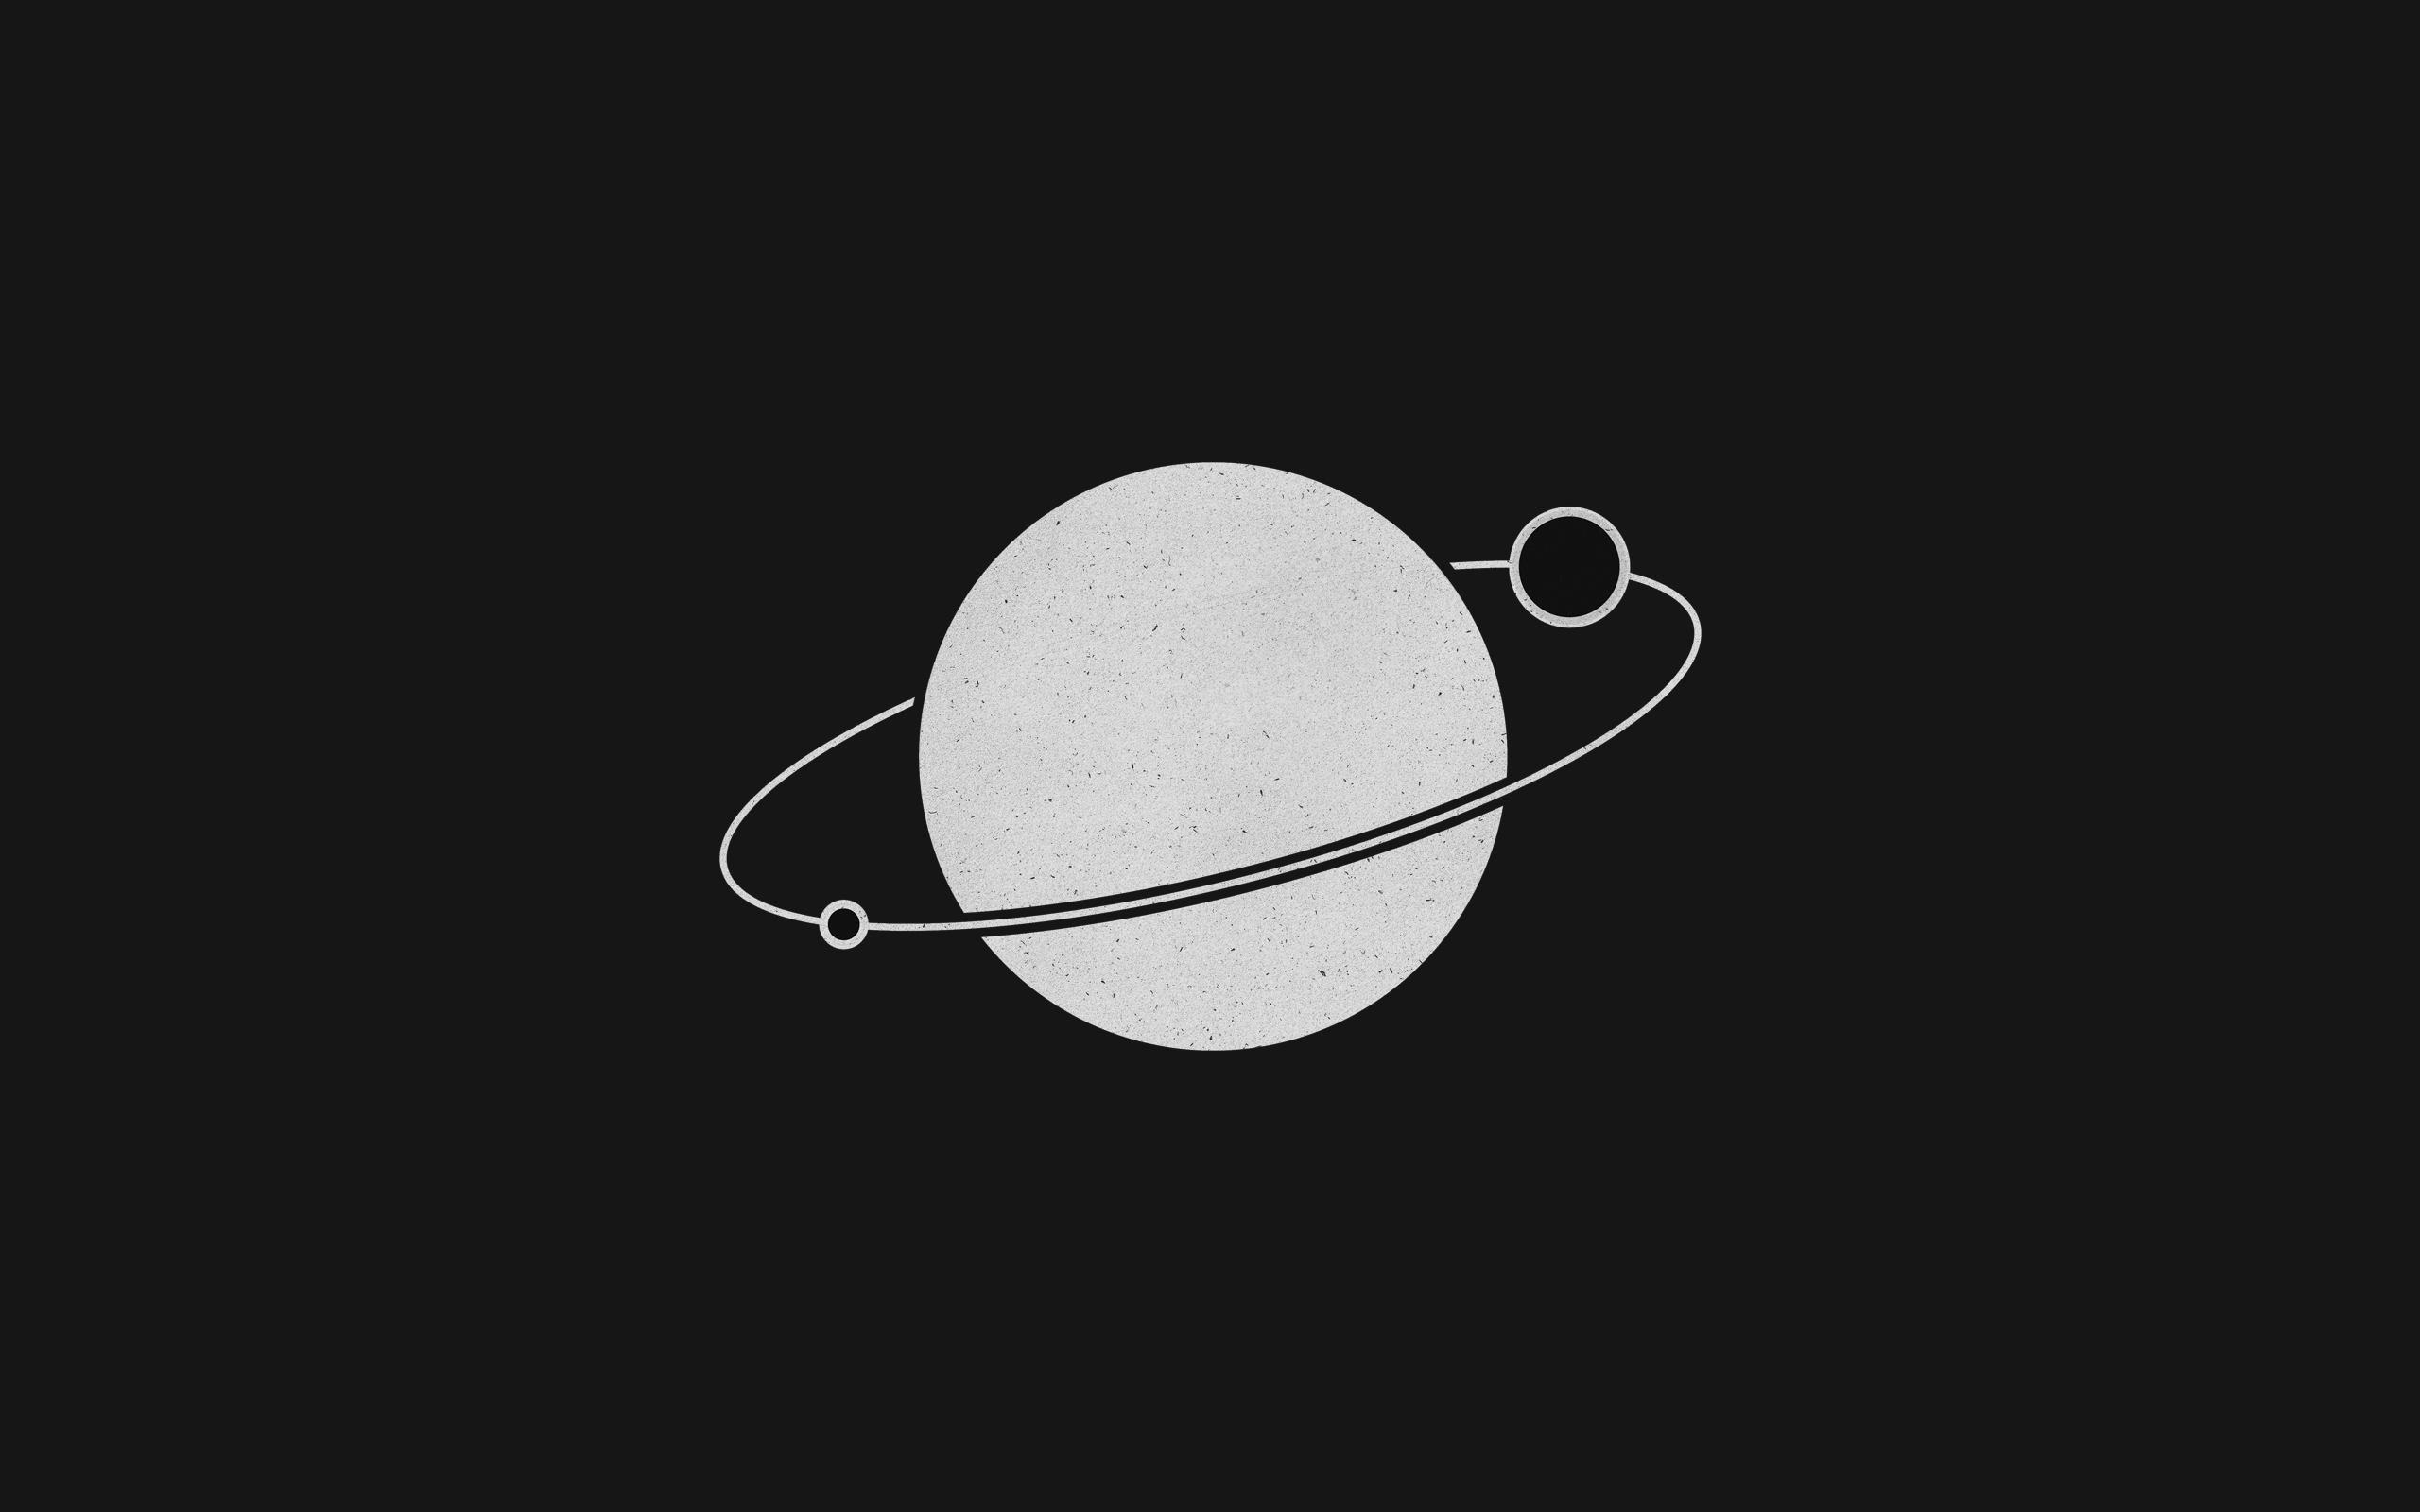 General 2560x1600 simple background minimalism monochrome space art planet